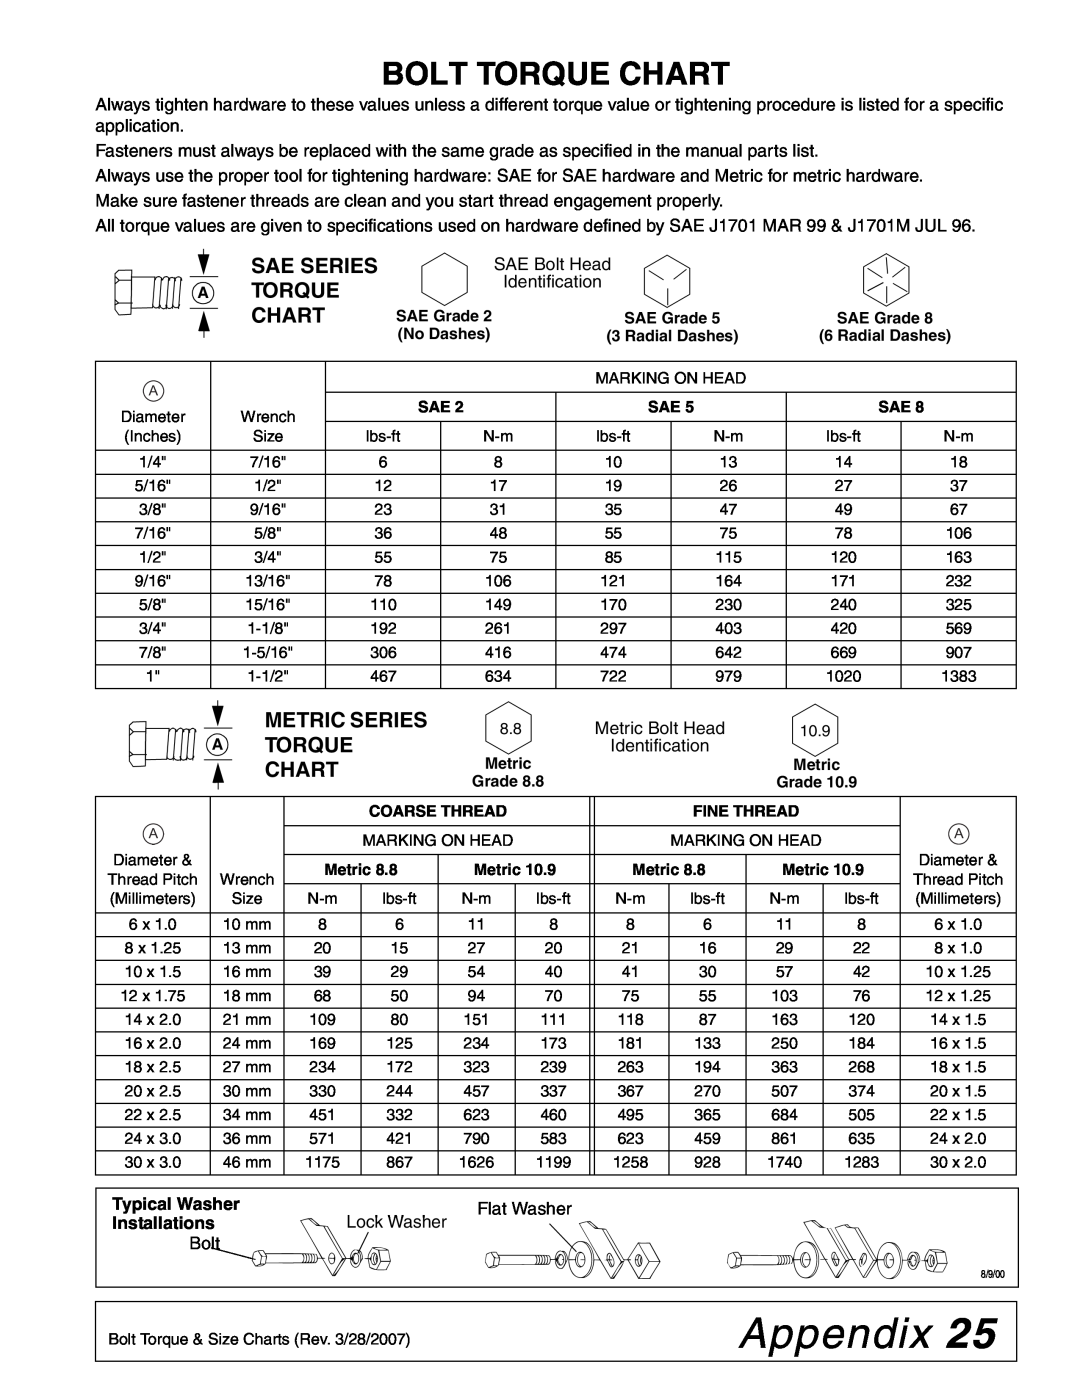 Woods Equipment 111877 manual Appendix, Bolt Torque Chart, Sae Series A Torque Chart, Metric Series, Typical Washer 